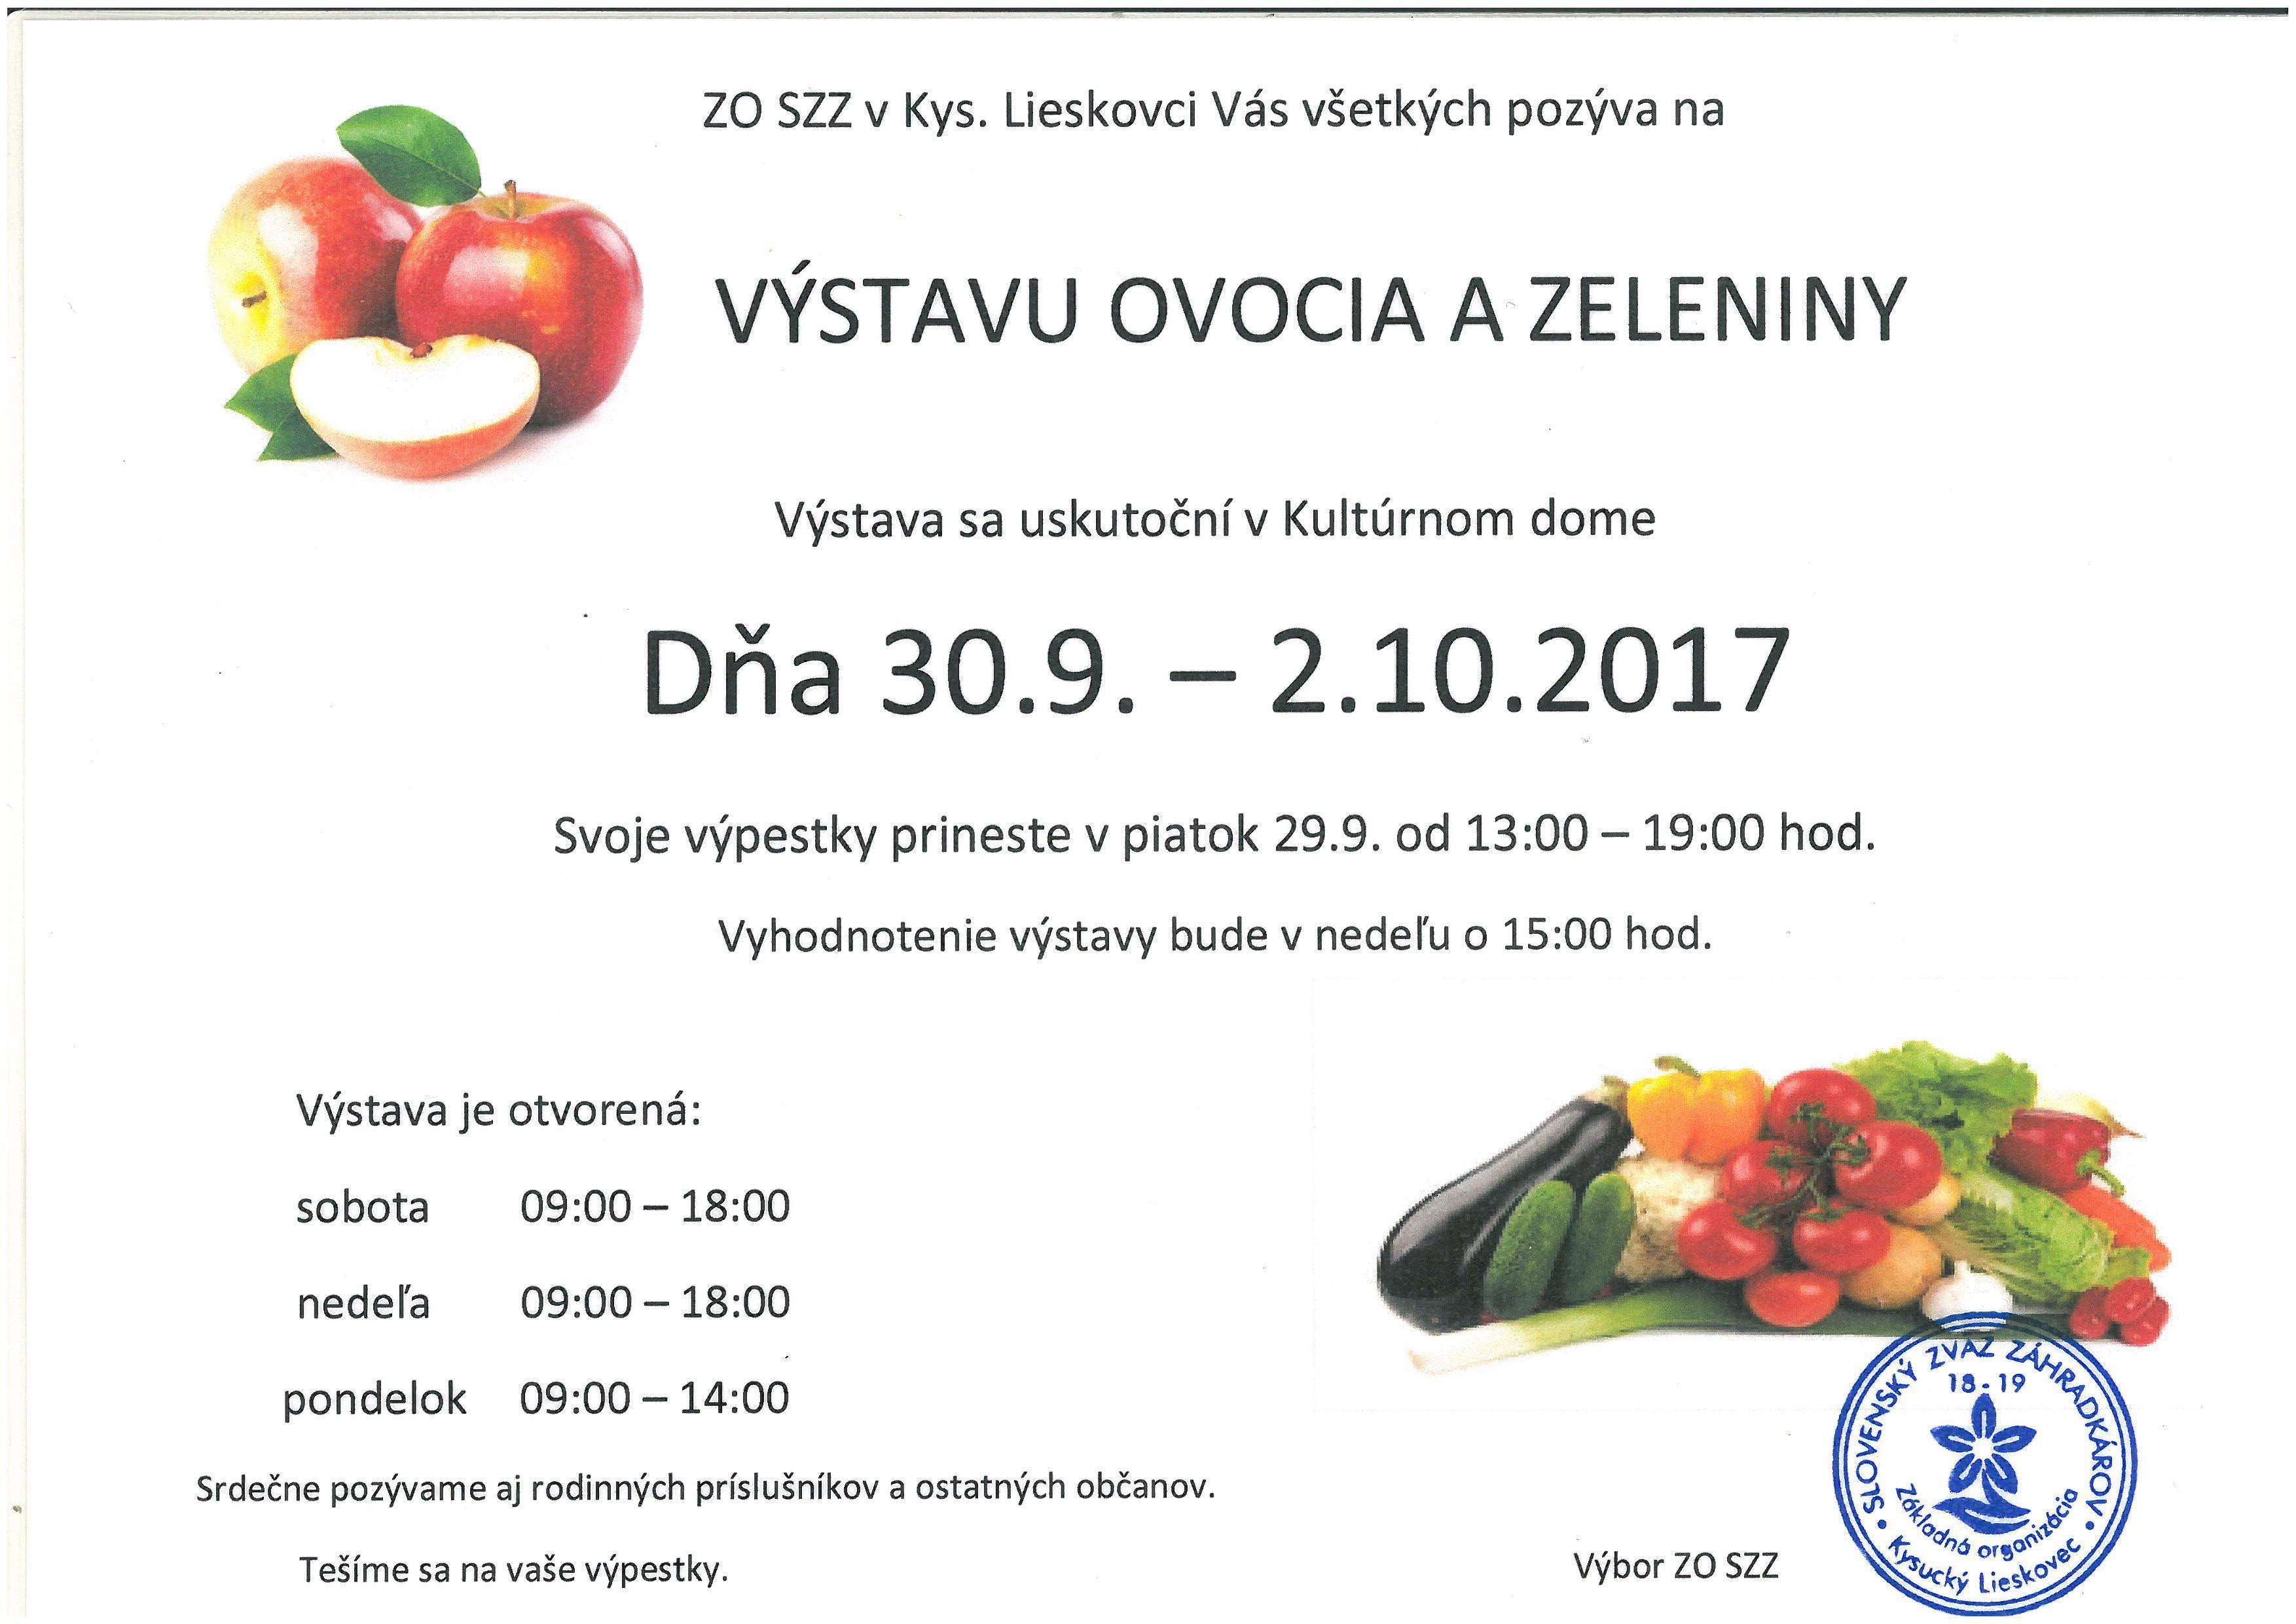 Pozvánka na výstavu ovocia a zeleniny v obci Kysucký Lieskovec